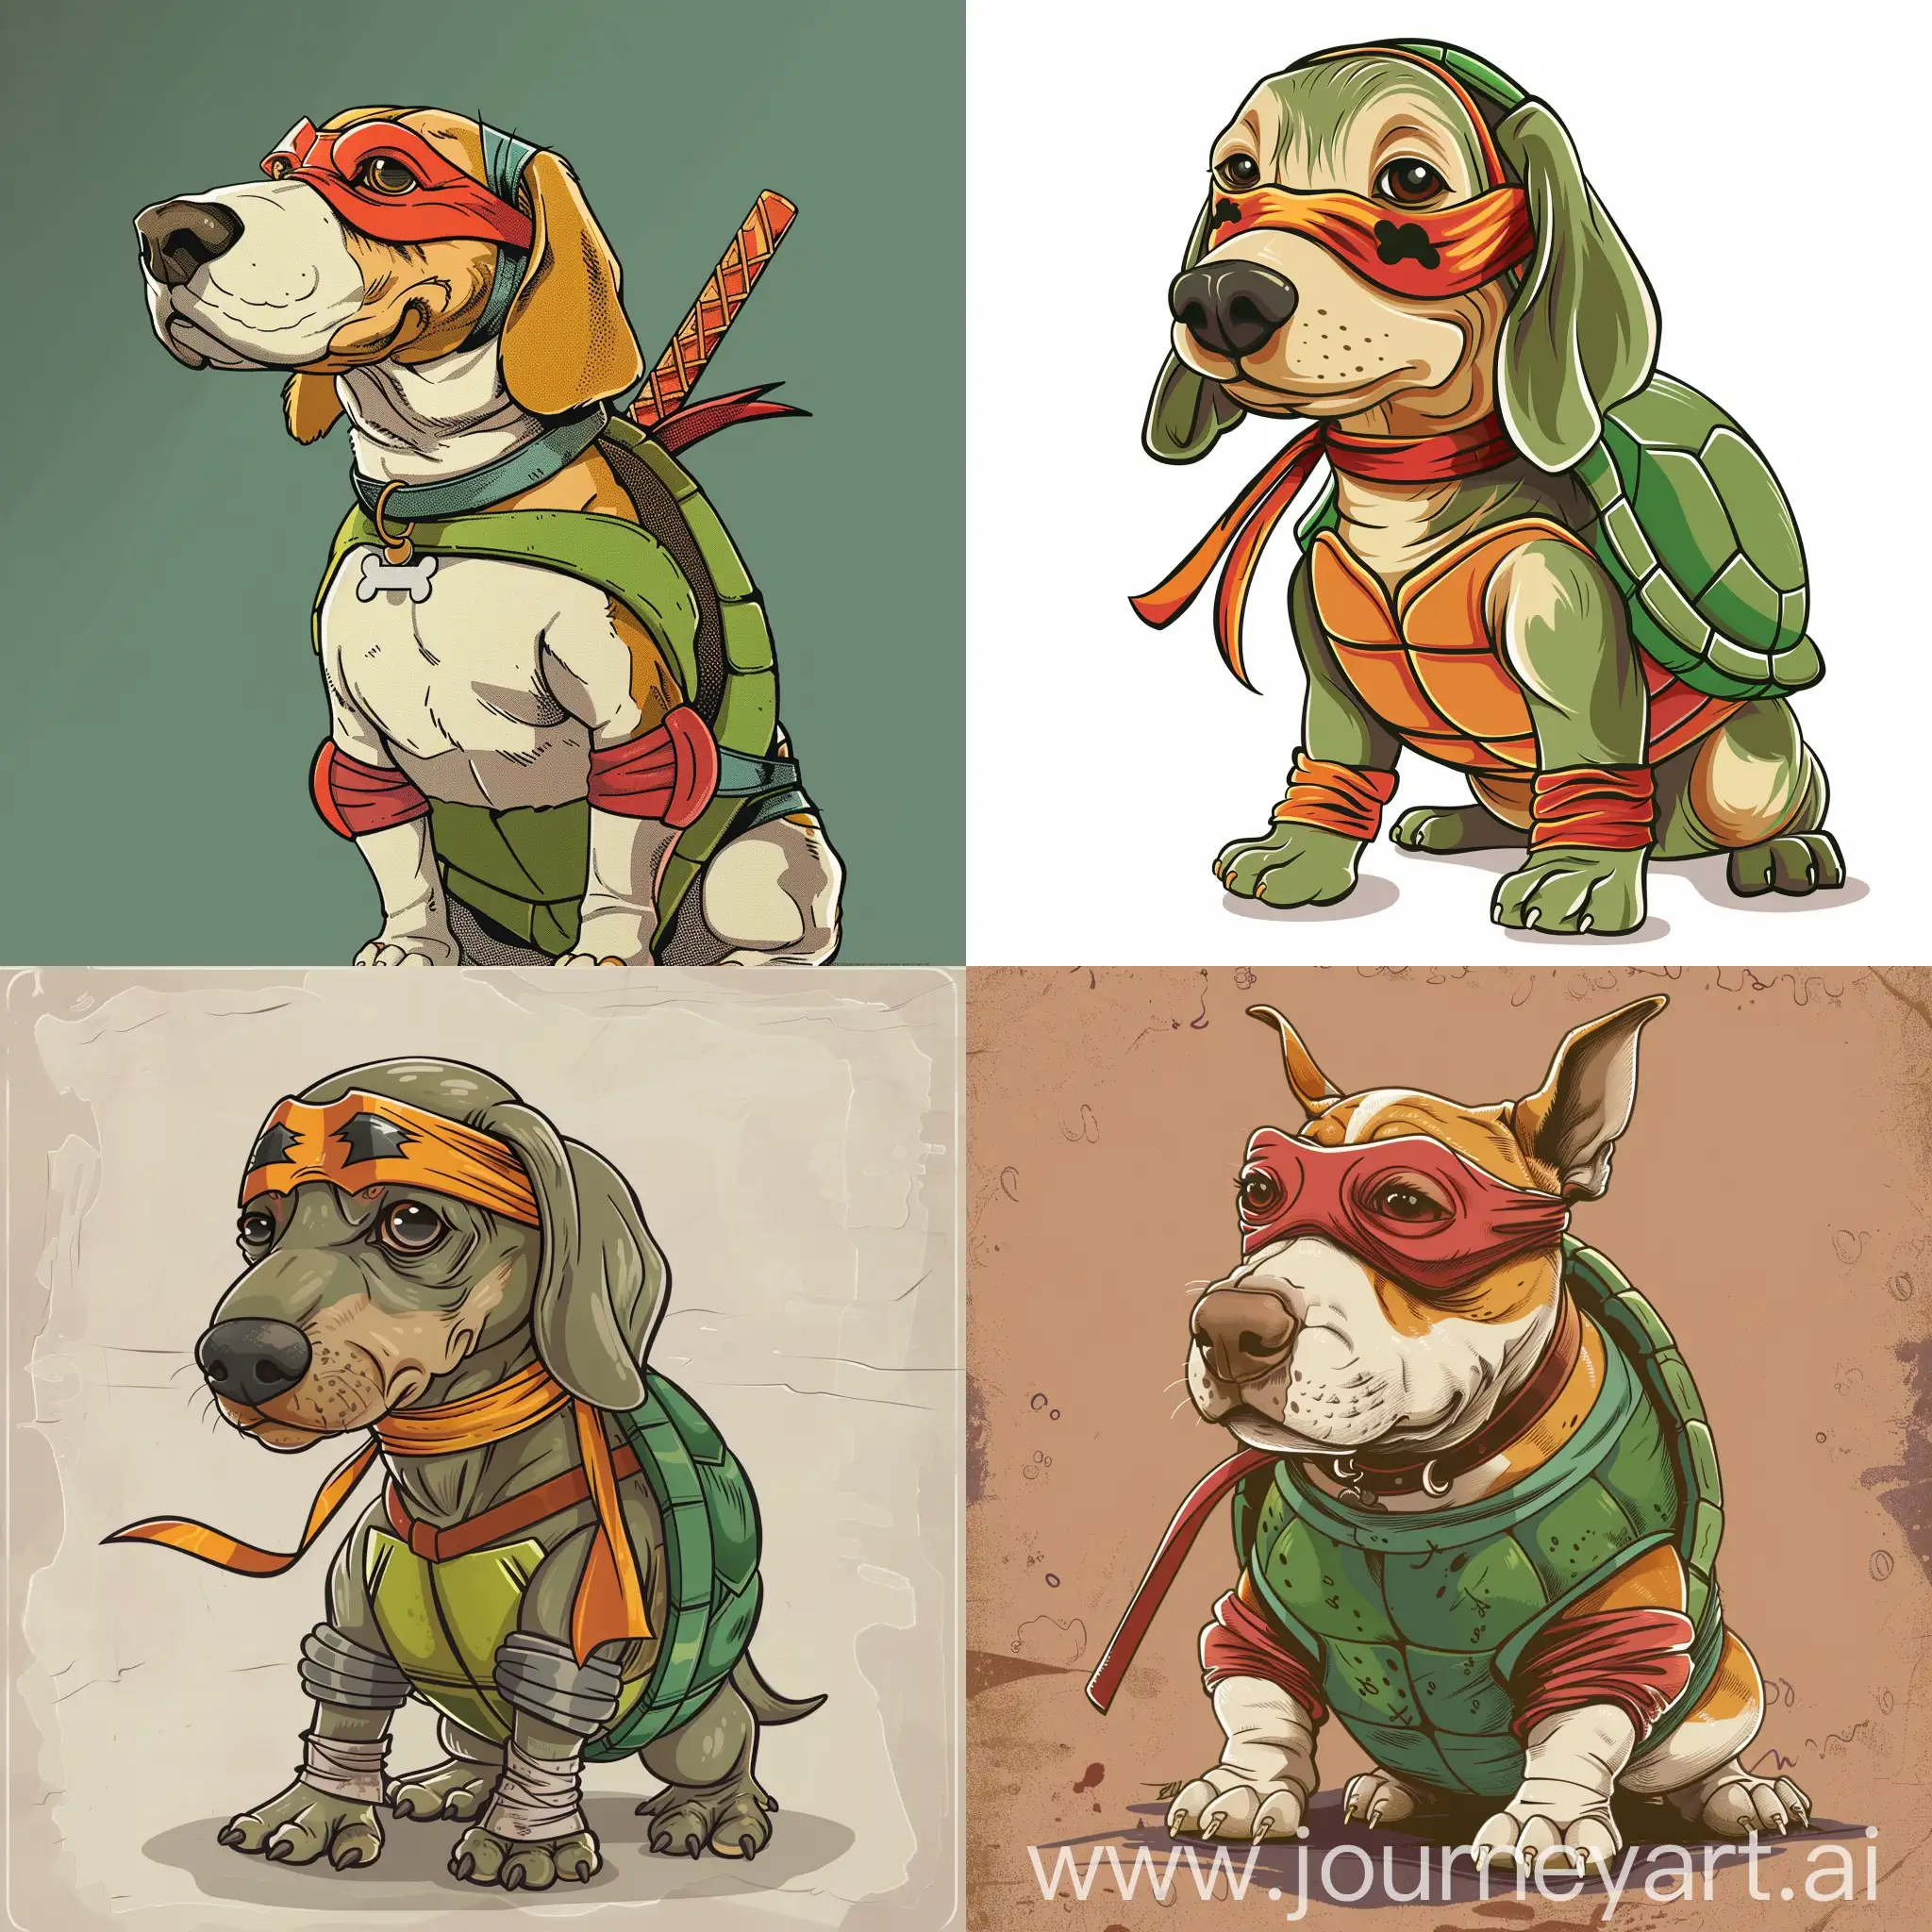 Cartoon Weiner dog dressed as ninja turtle